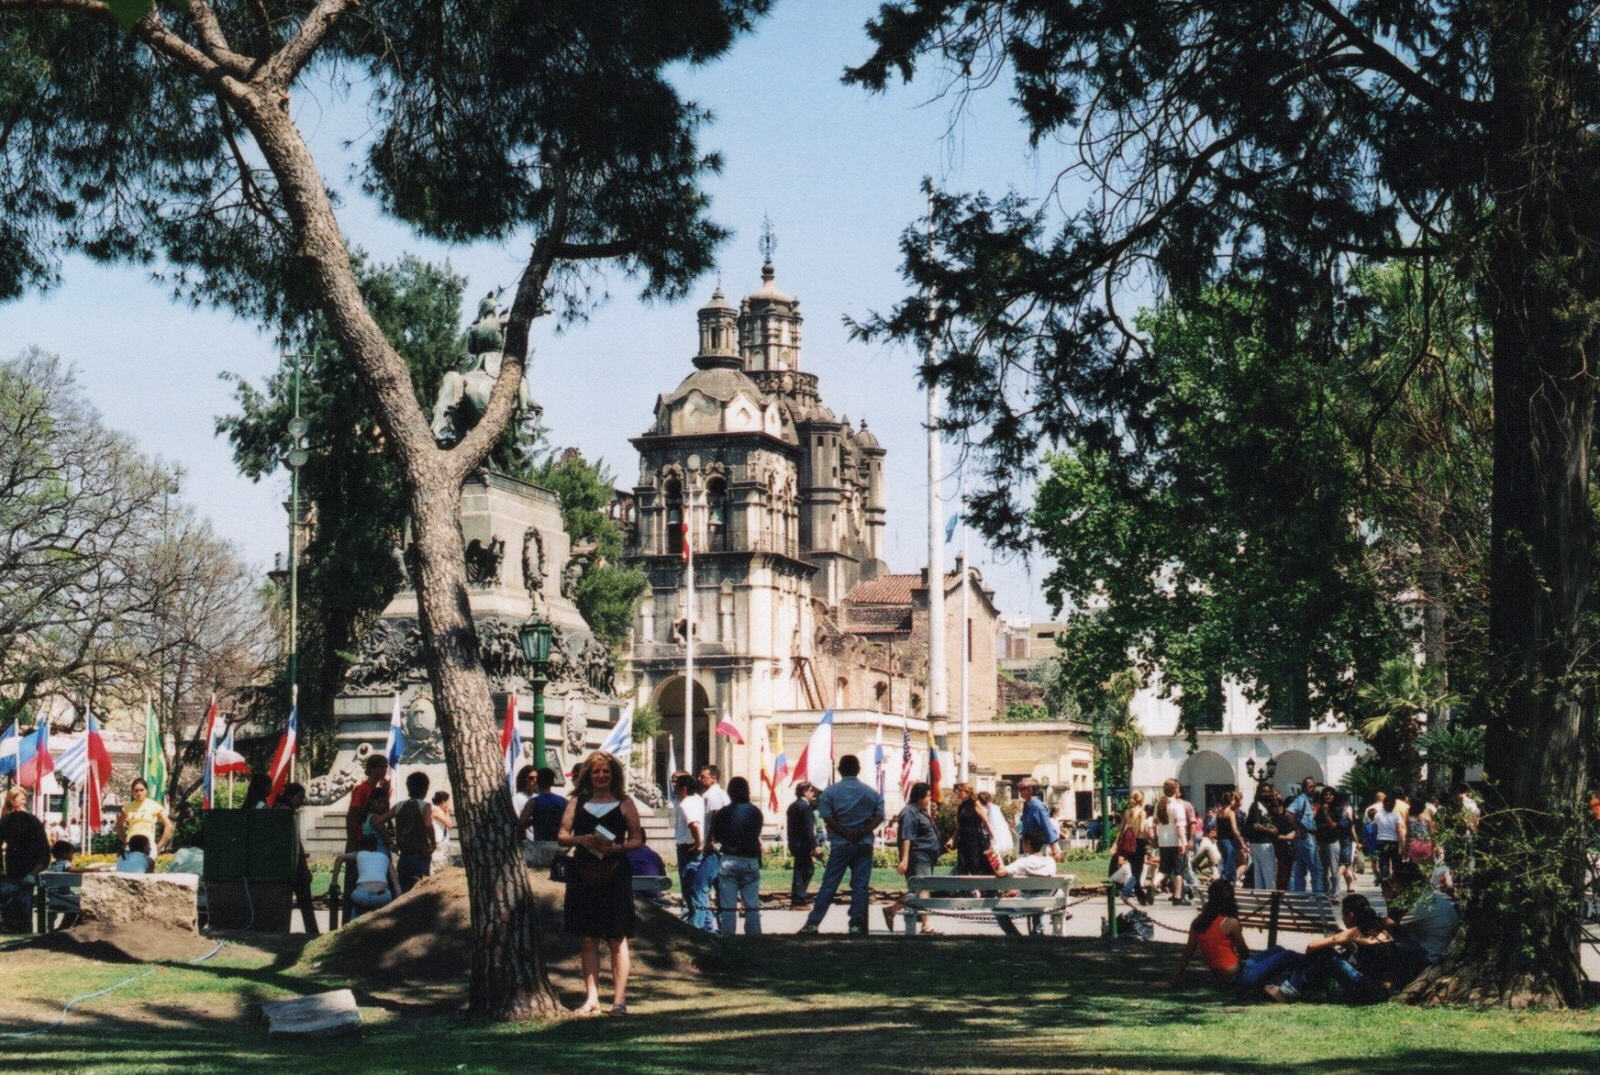 Plaza San Martin in Cordoba, Argentina